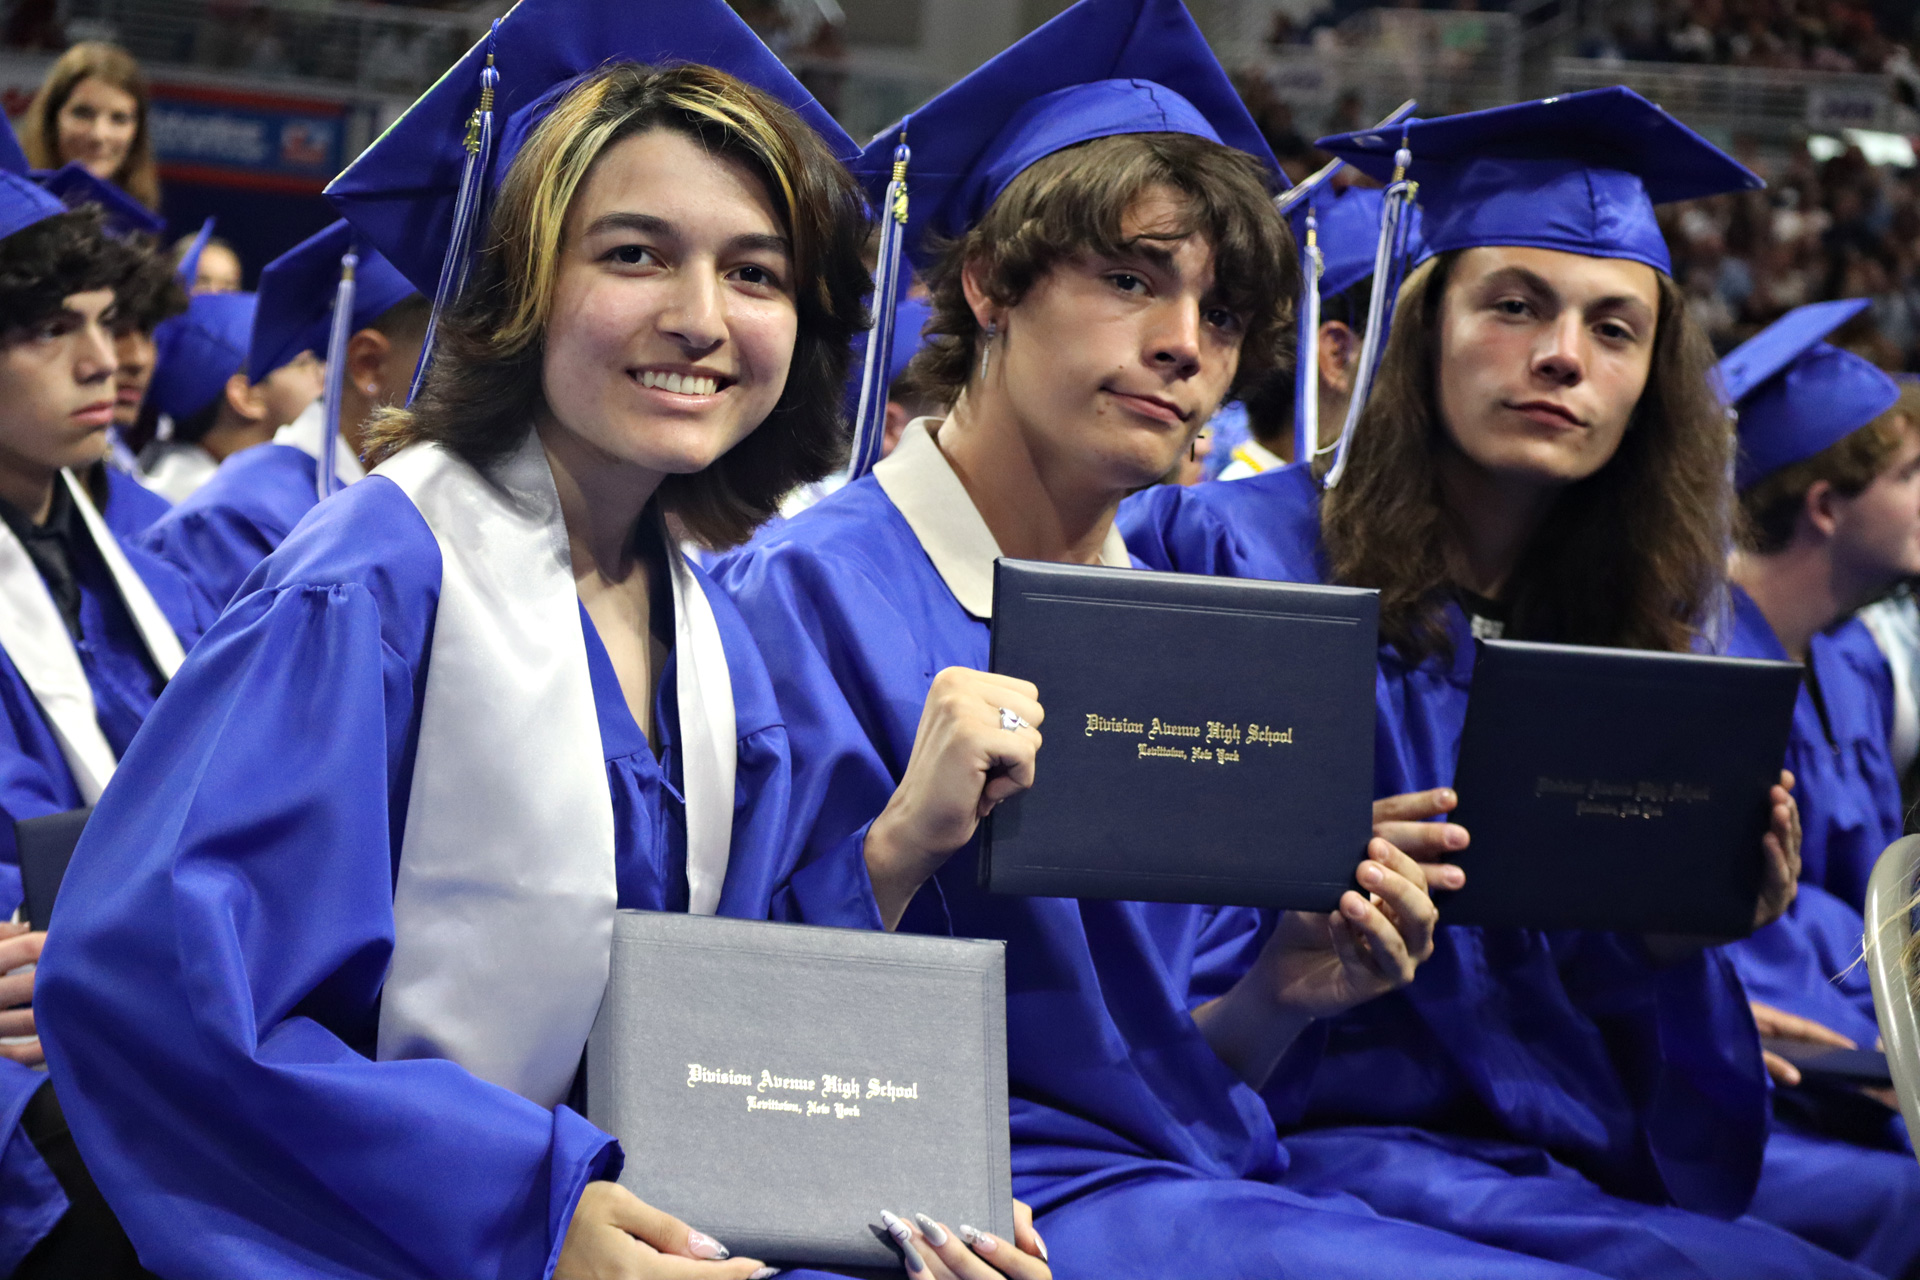 Graduates showed their pride in reaching a momentous milestone.